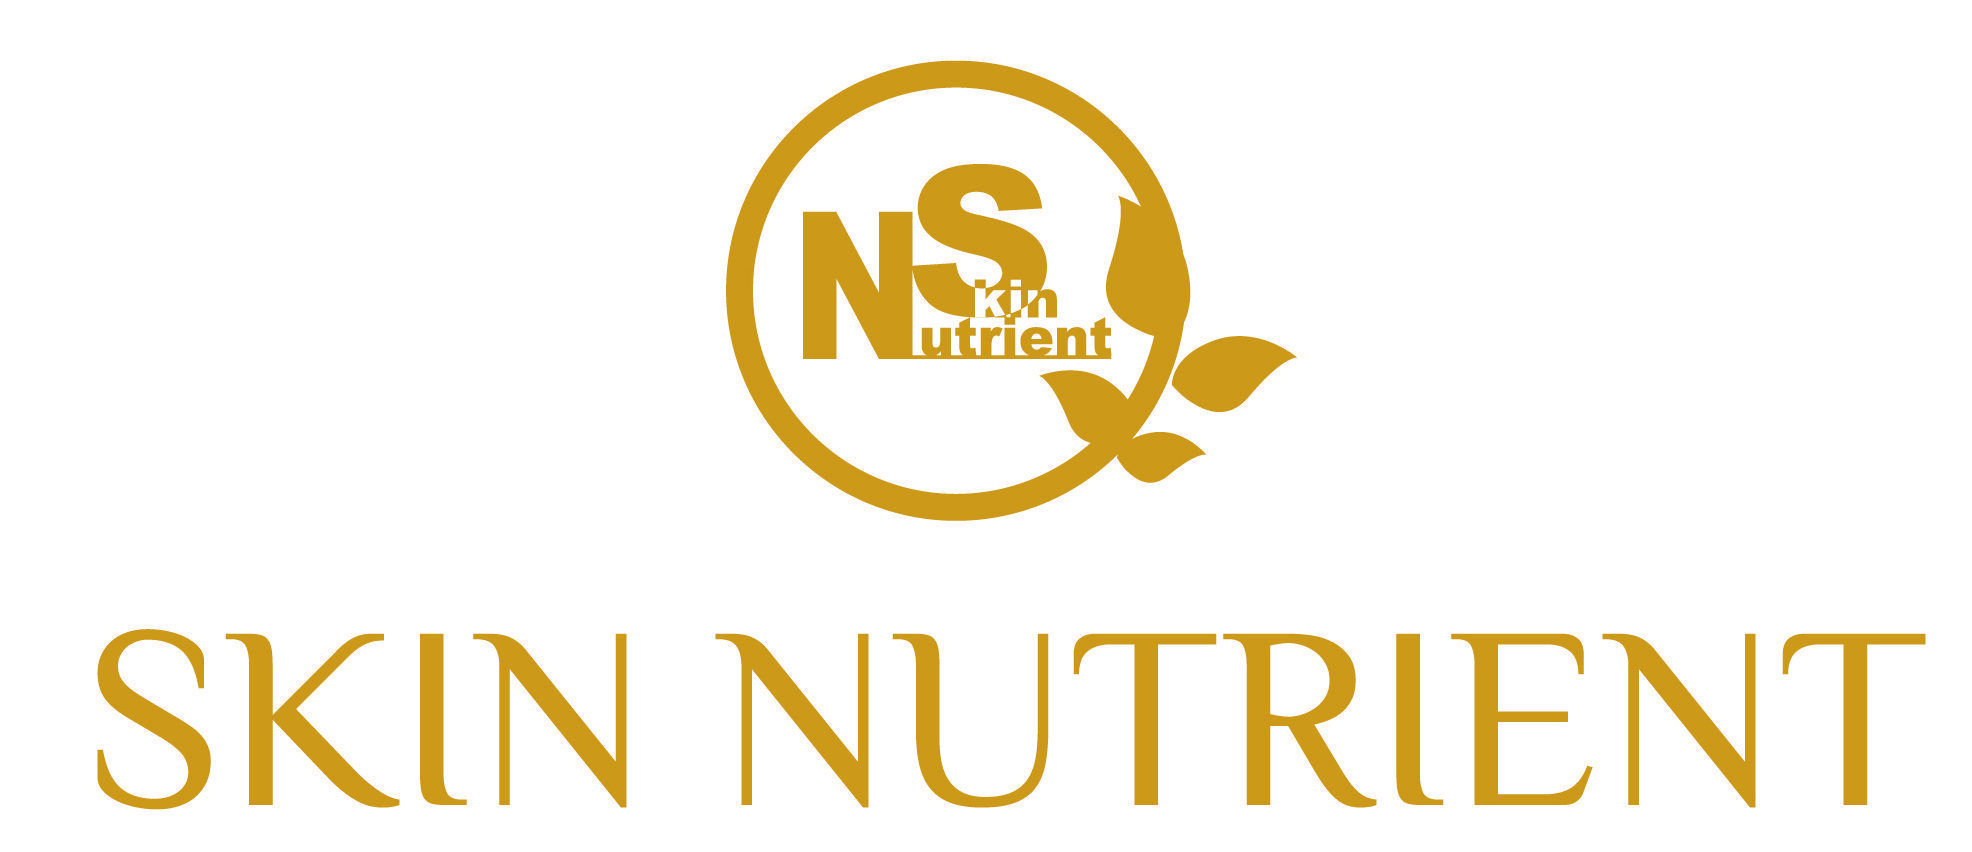 Nutrient Logo - Exhibitor Directory | Skin Nutrient - Alibaba E-Commerce Expo